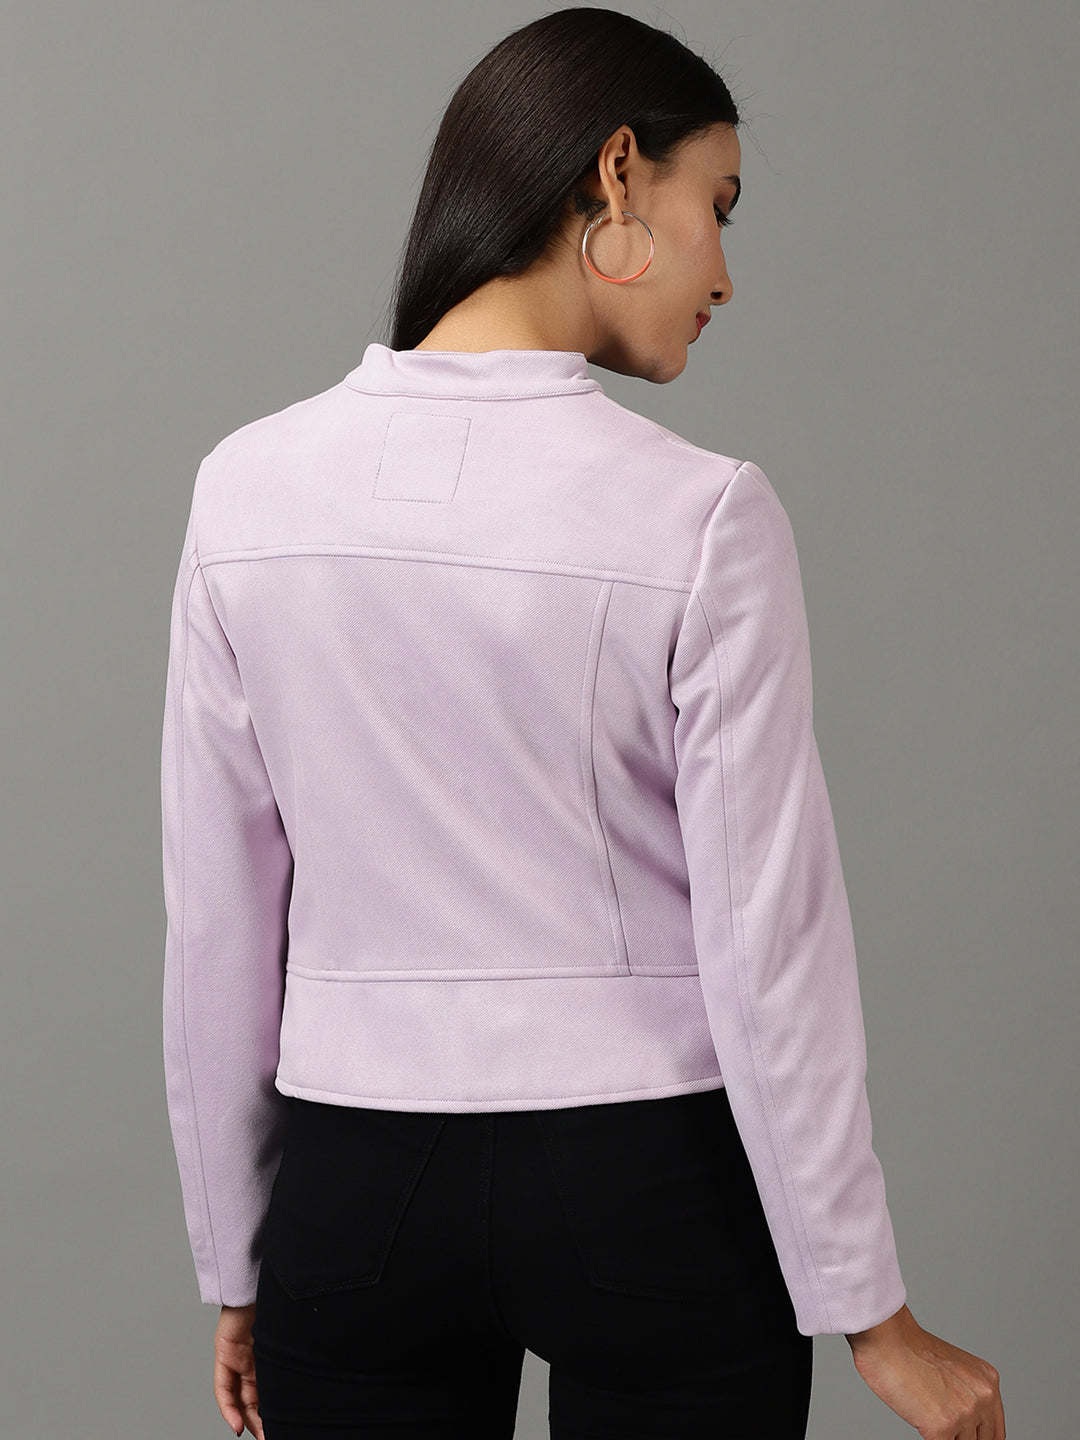 Women's Lavender Solid Open Front Jacket